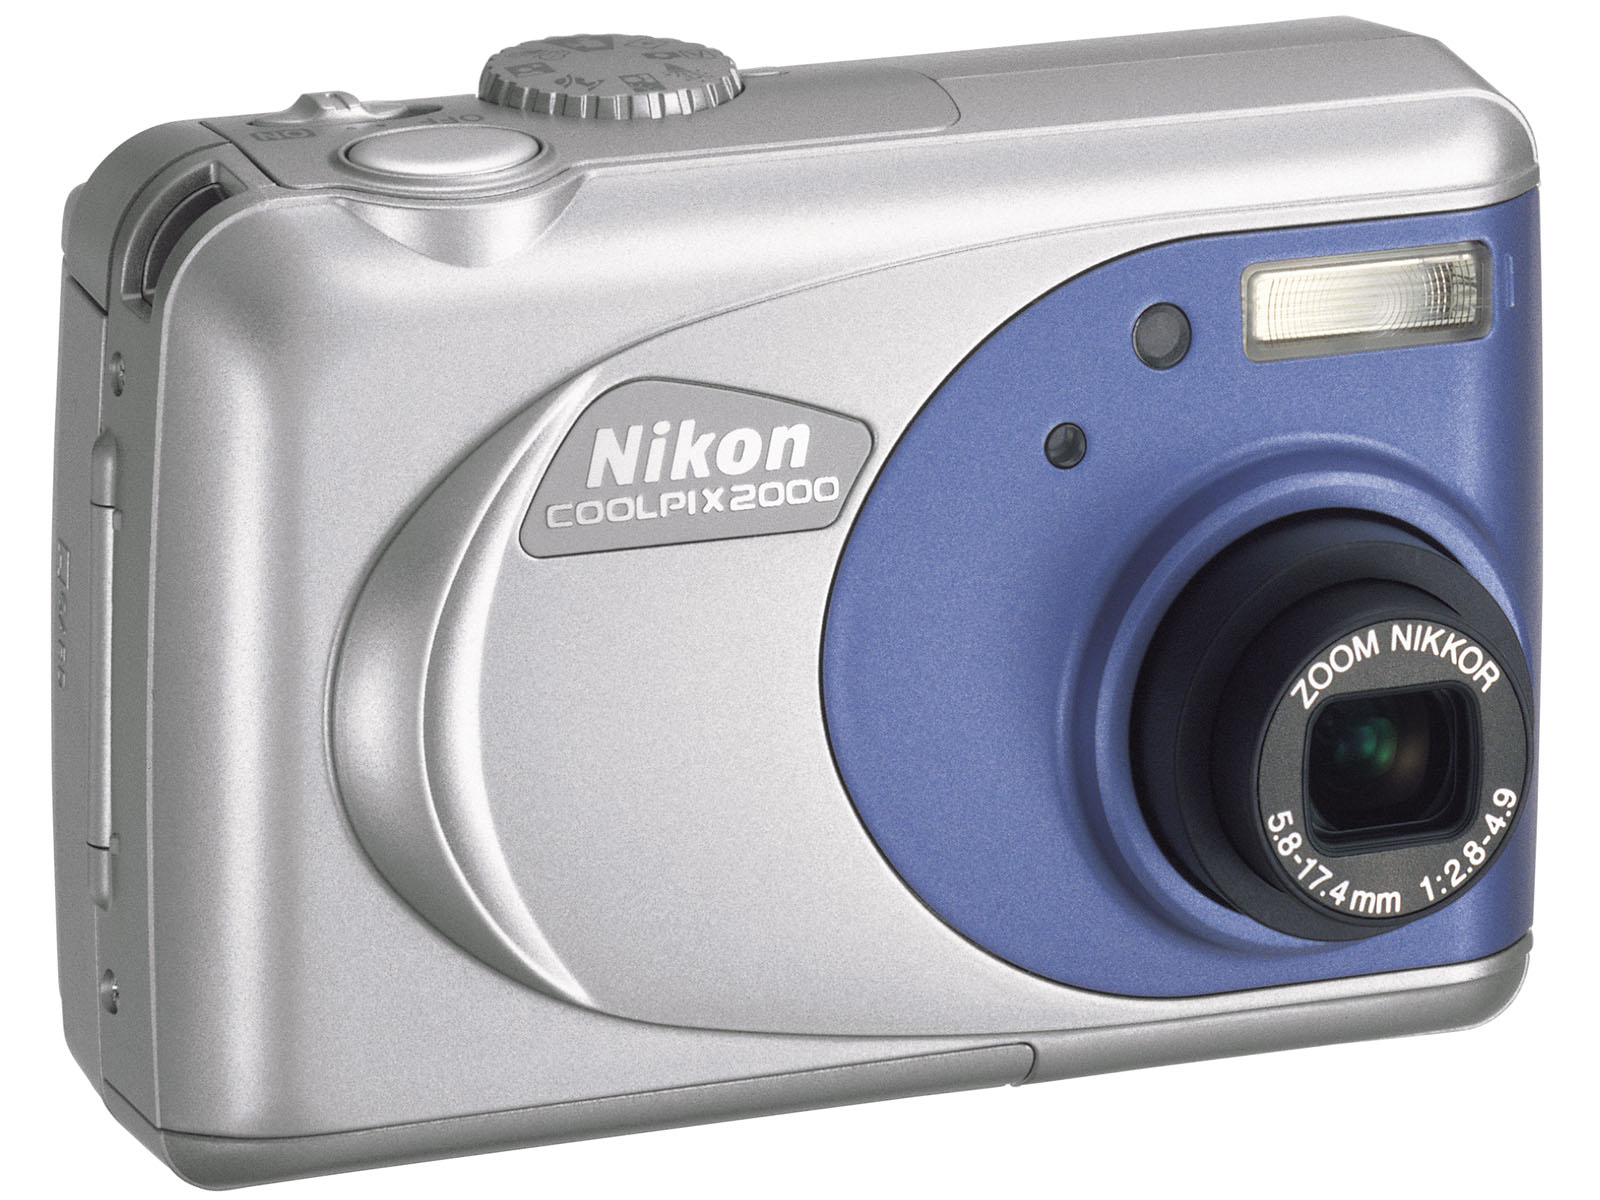 Dc403 digital camera. Nikon Coolpix 2000. Nikon Coolpix 2003. Nikon Coolpix s210.